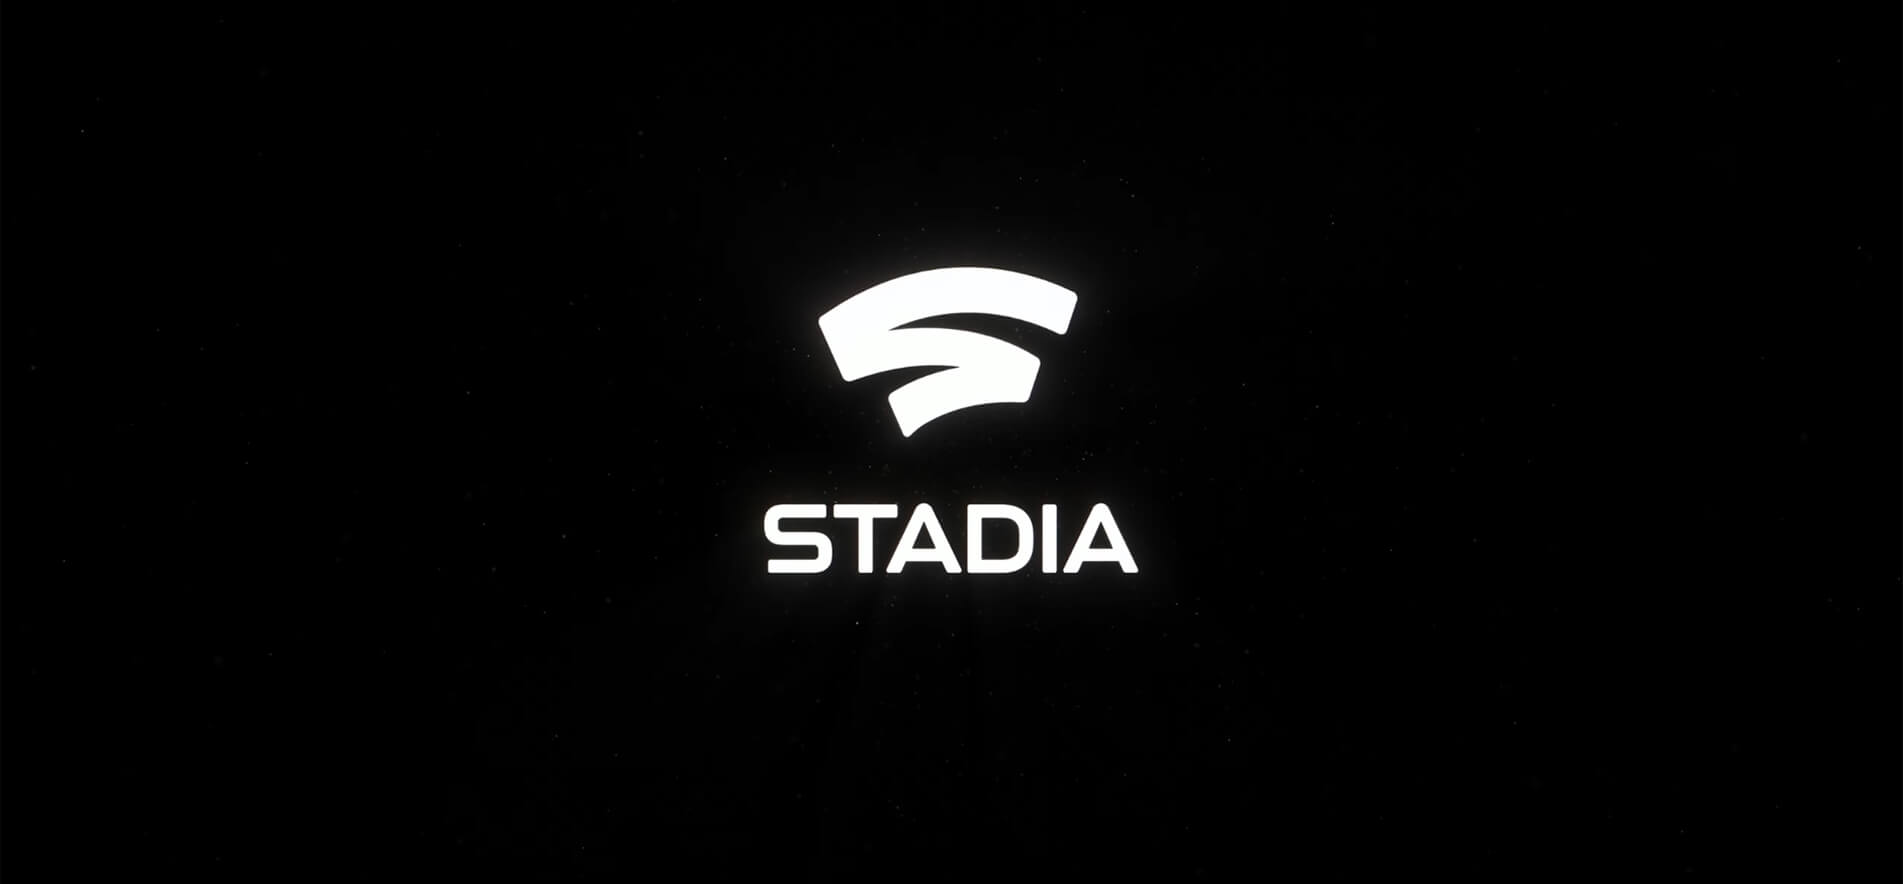 Google презентовала облачную игровую платформу Stadia (фото)